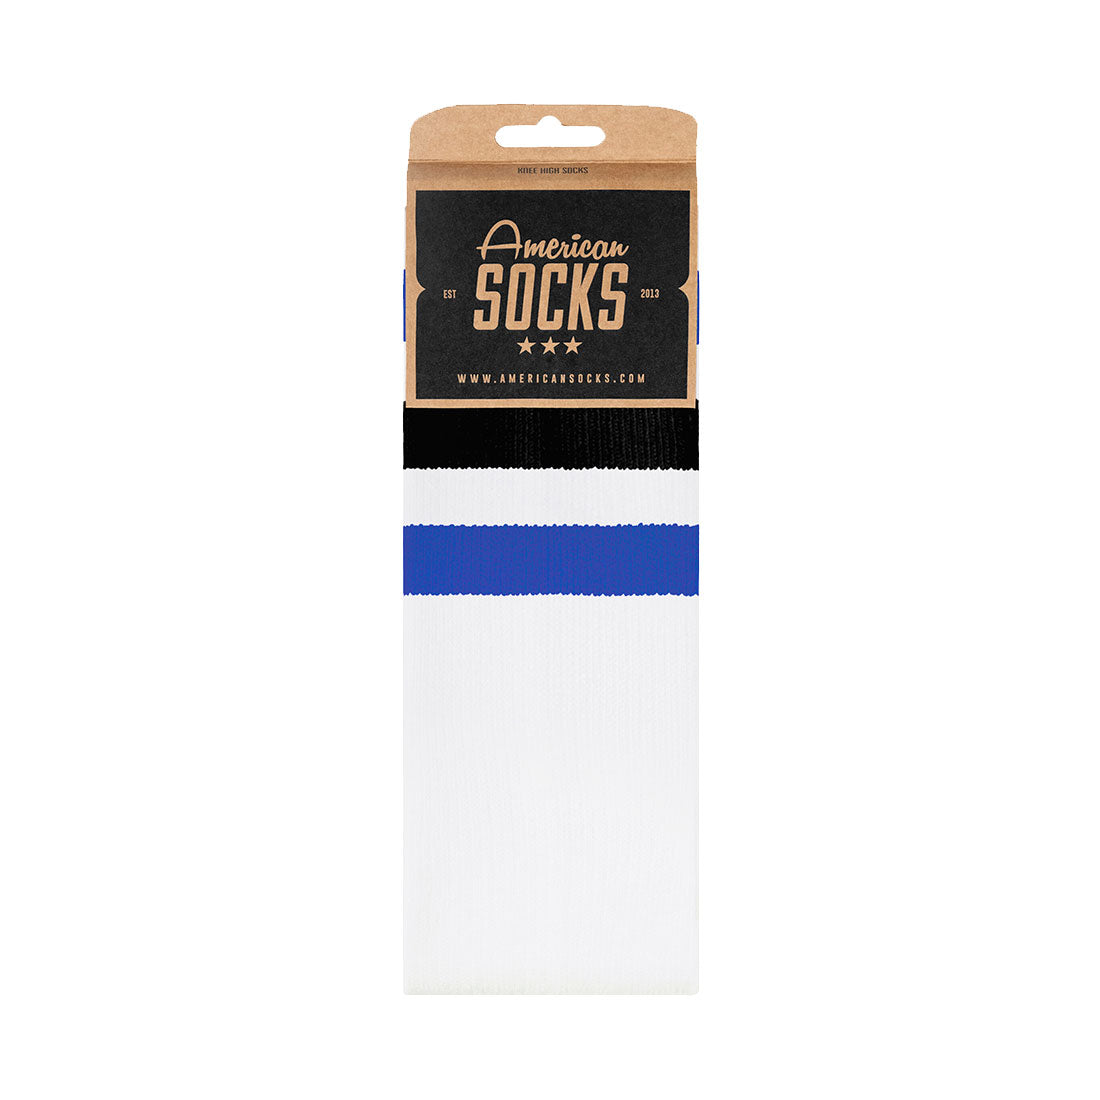 American Socks Classic - Prankster Apparel Socks